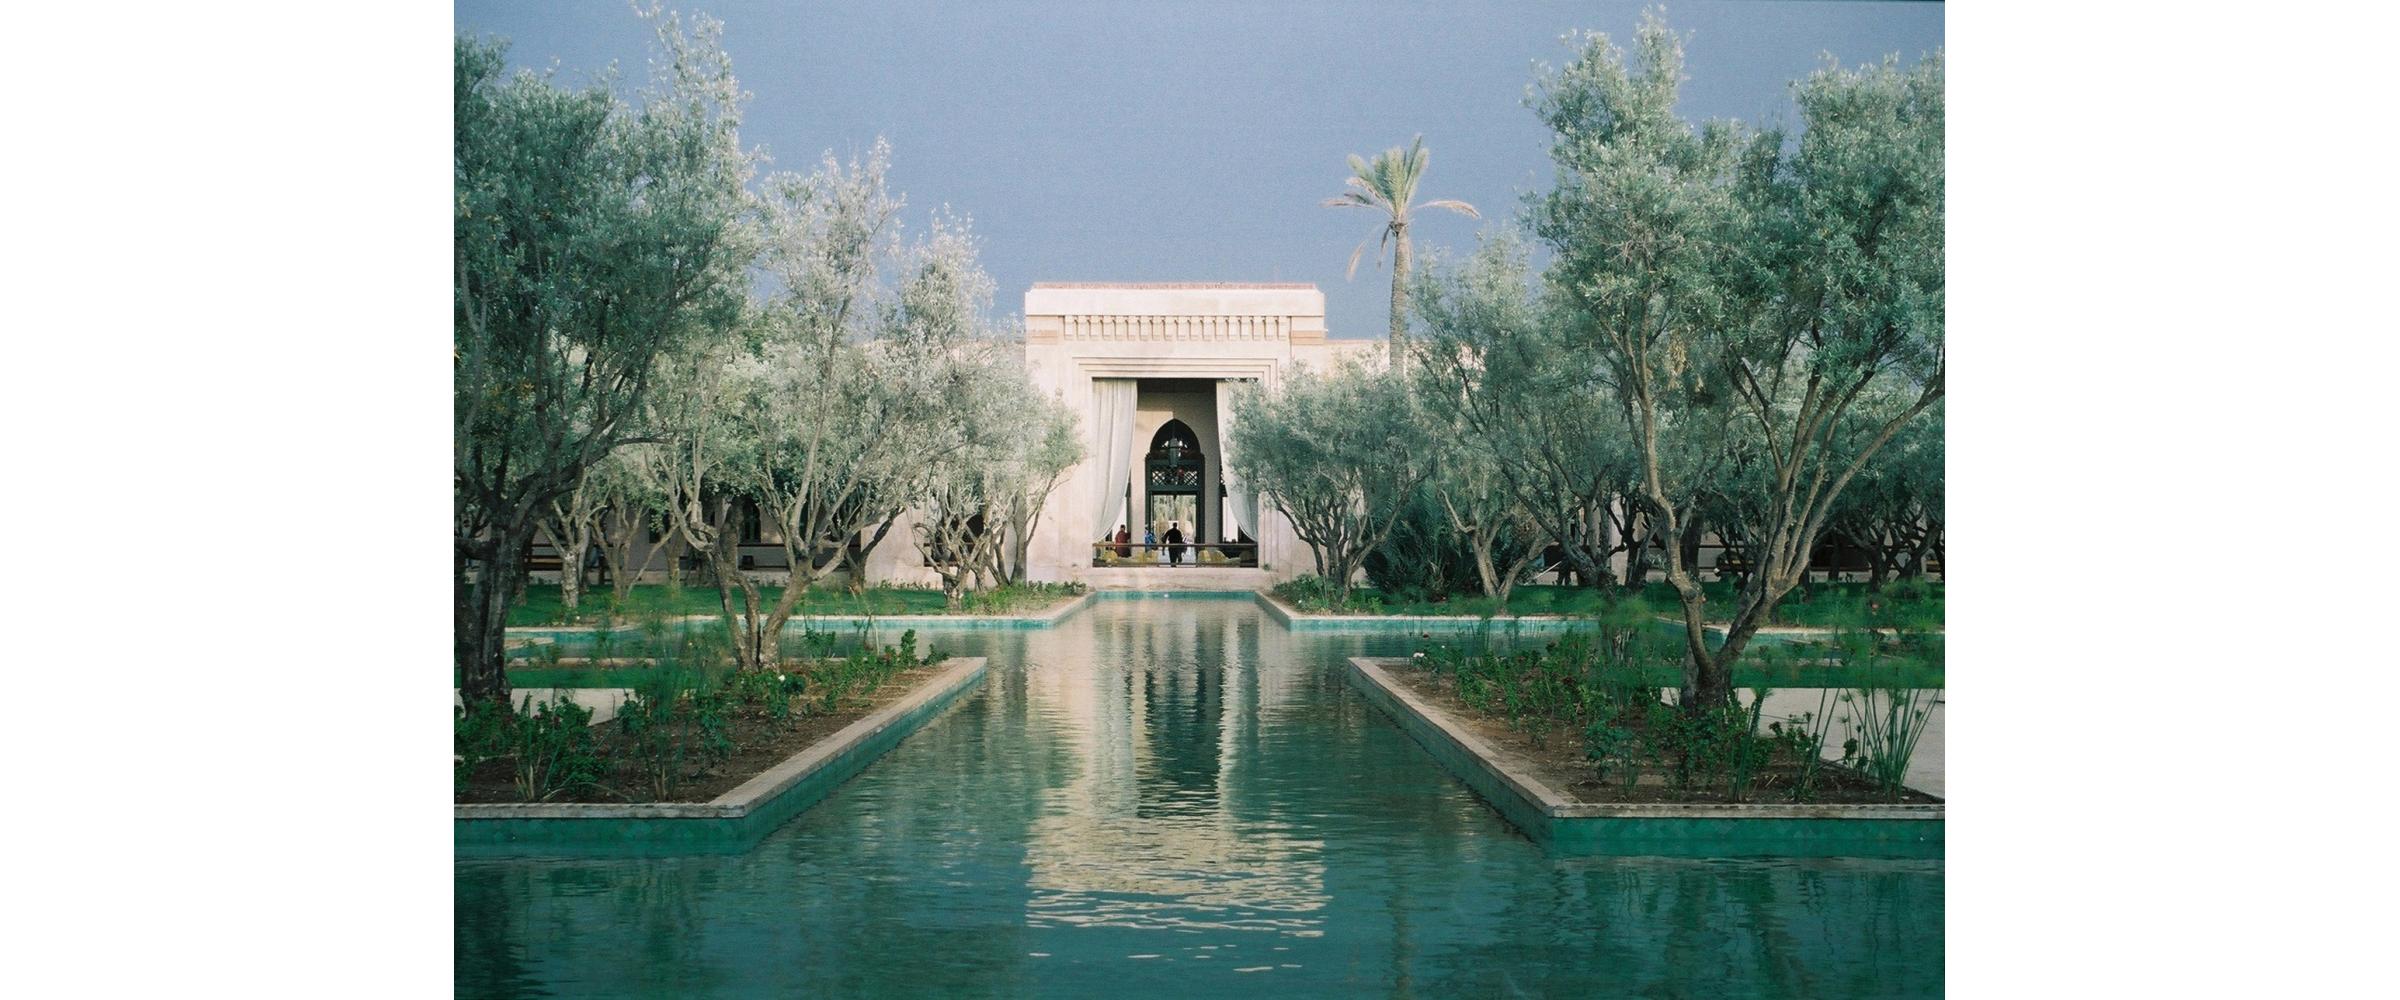 Hôtel 5 * Club Med Palmeraie Marrakech Maroc